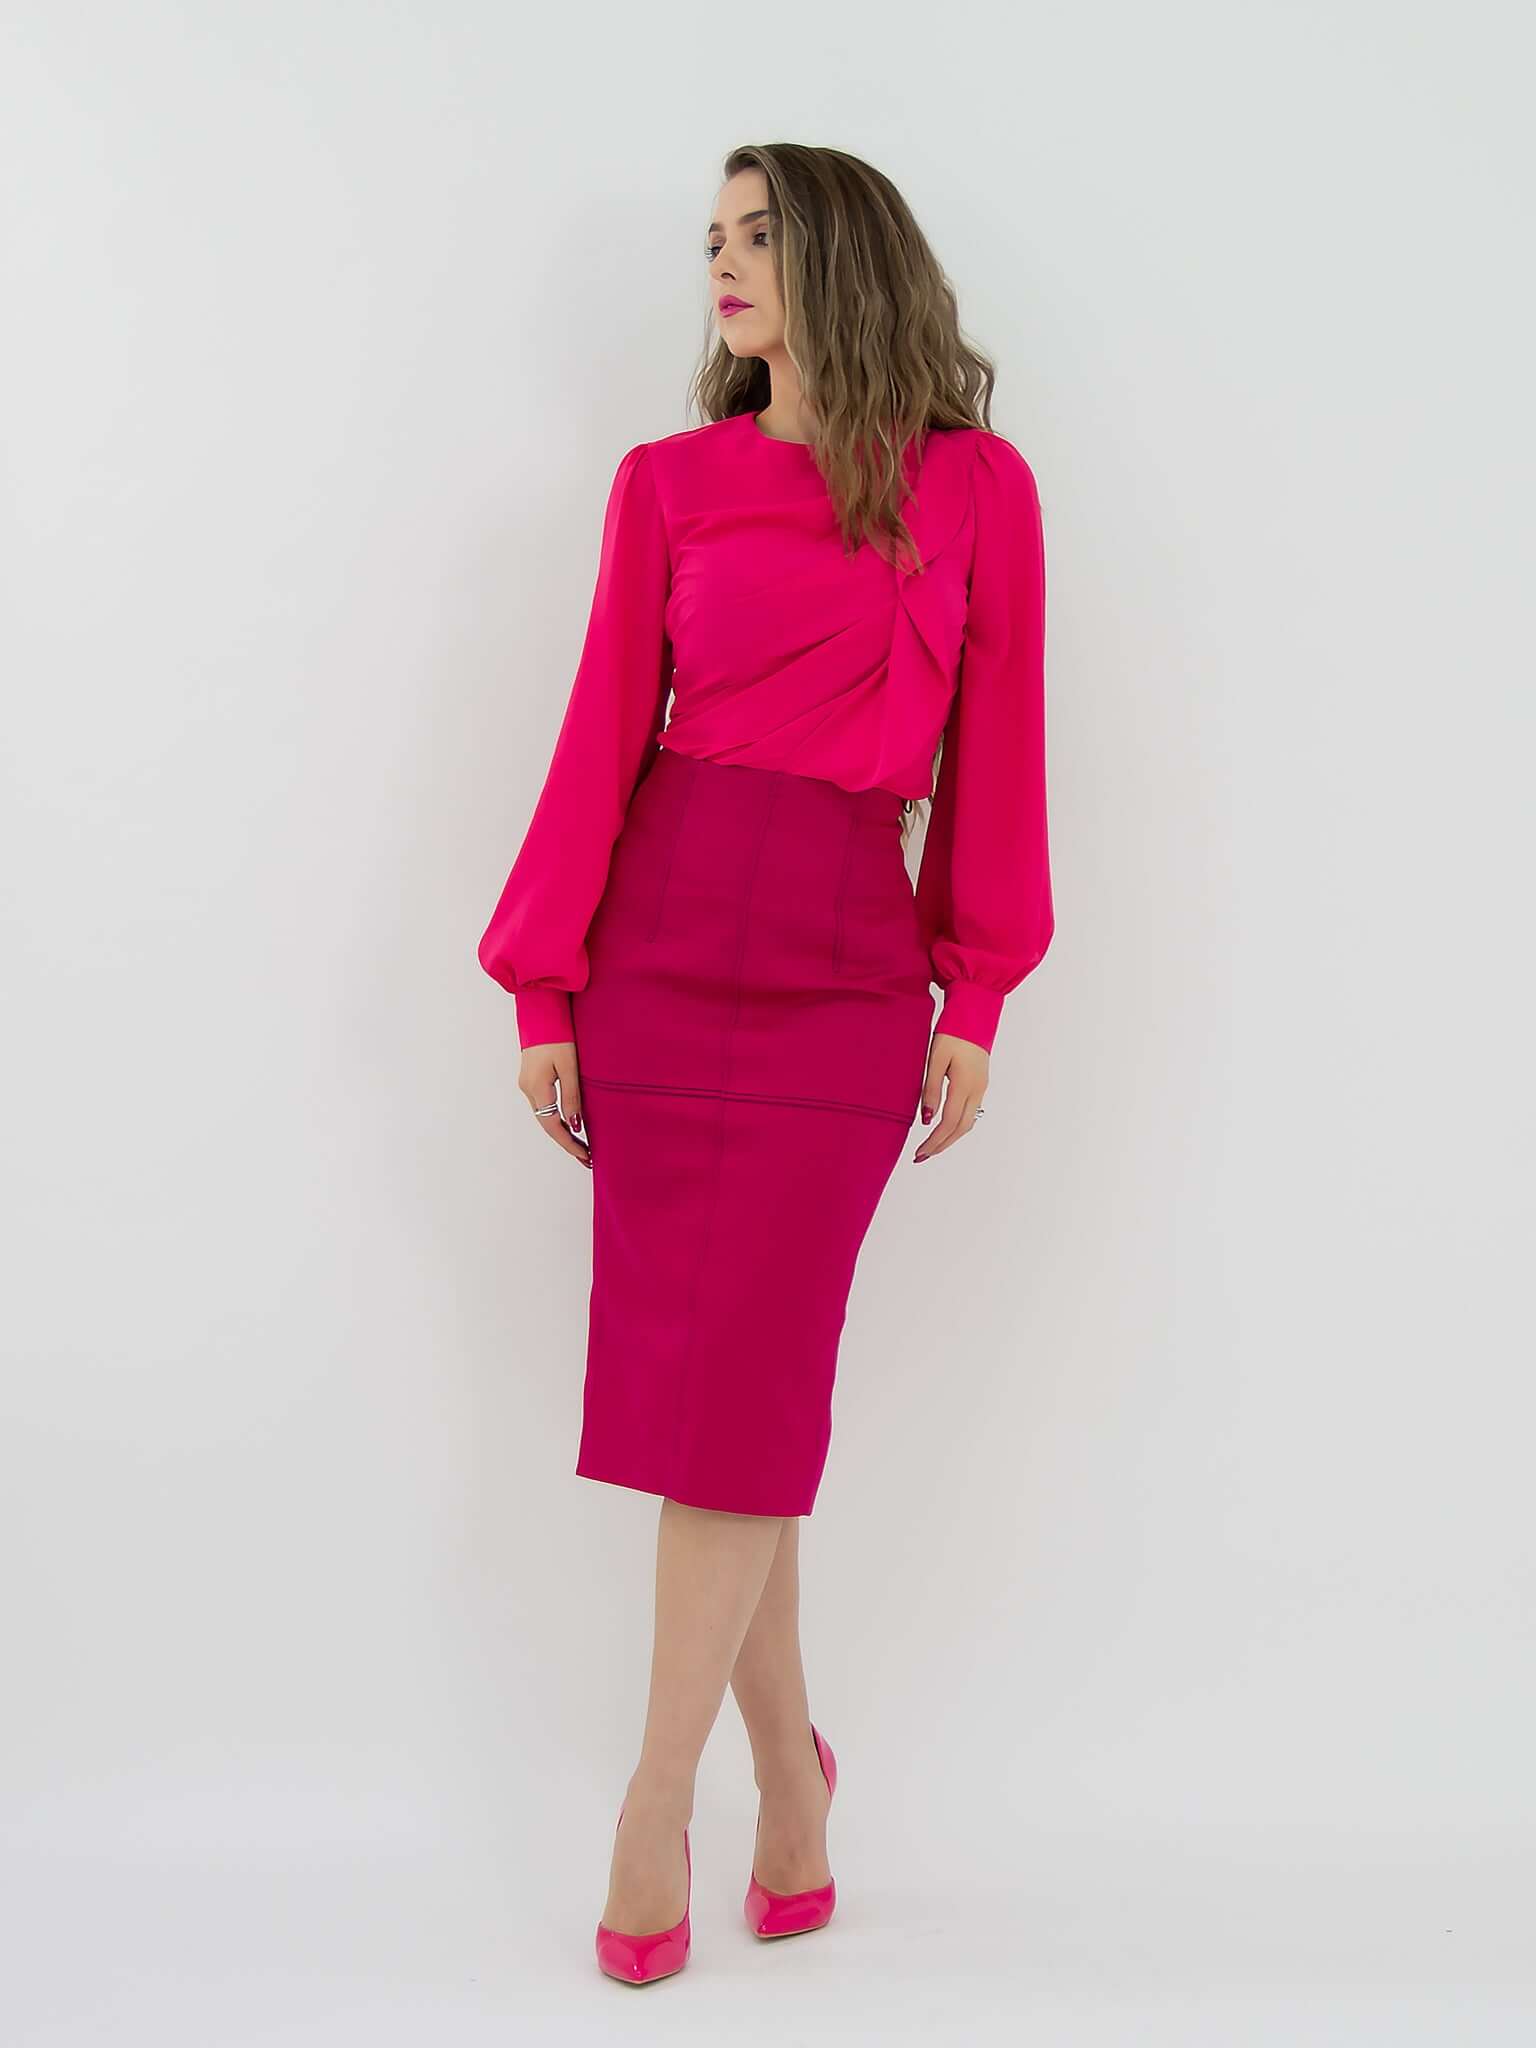 Dress to Impress Asymmetric Drape Blouse - Pink by Tia Dorraine Women's Luxury Fashion Designer Clothing Brand